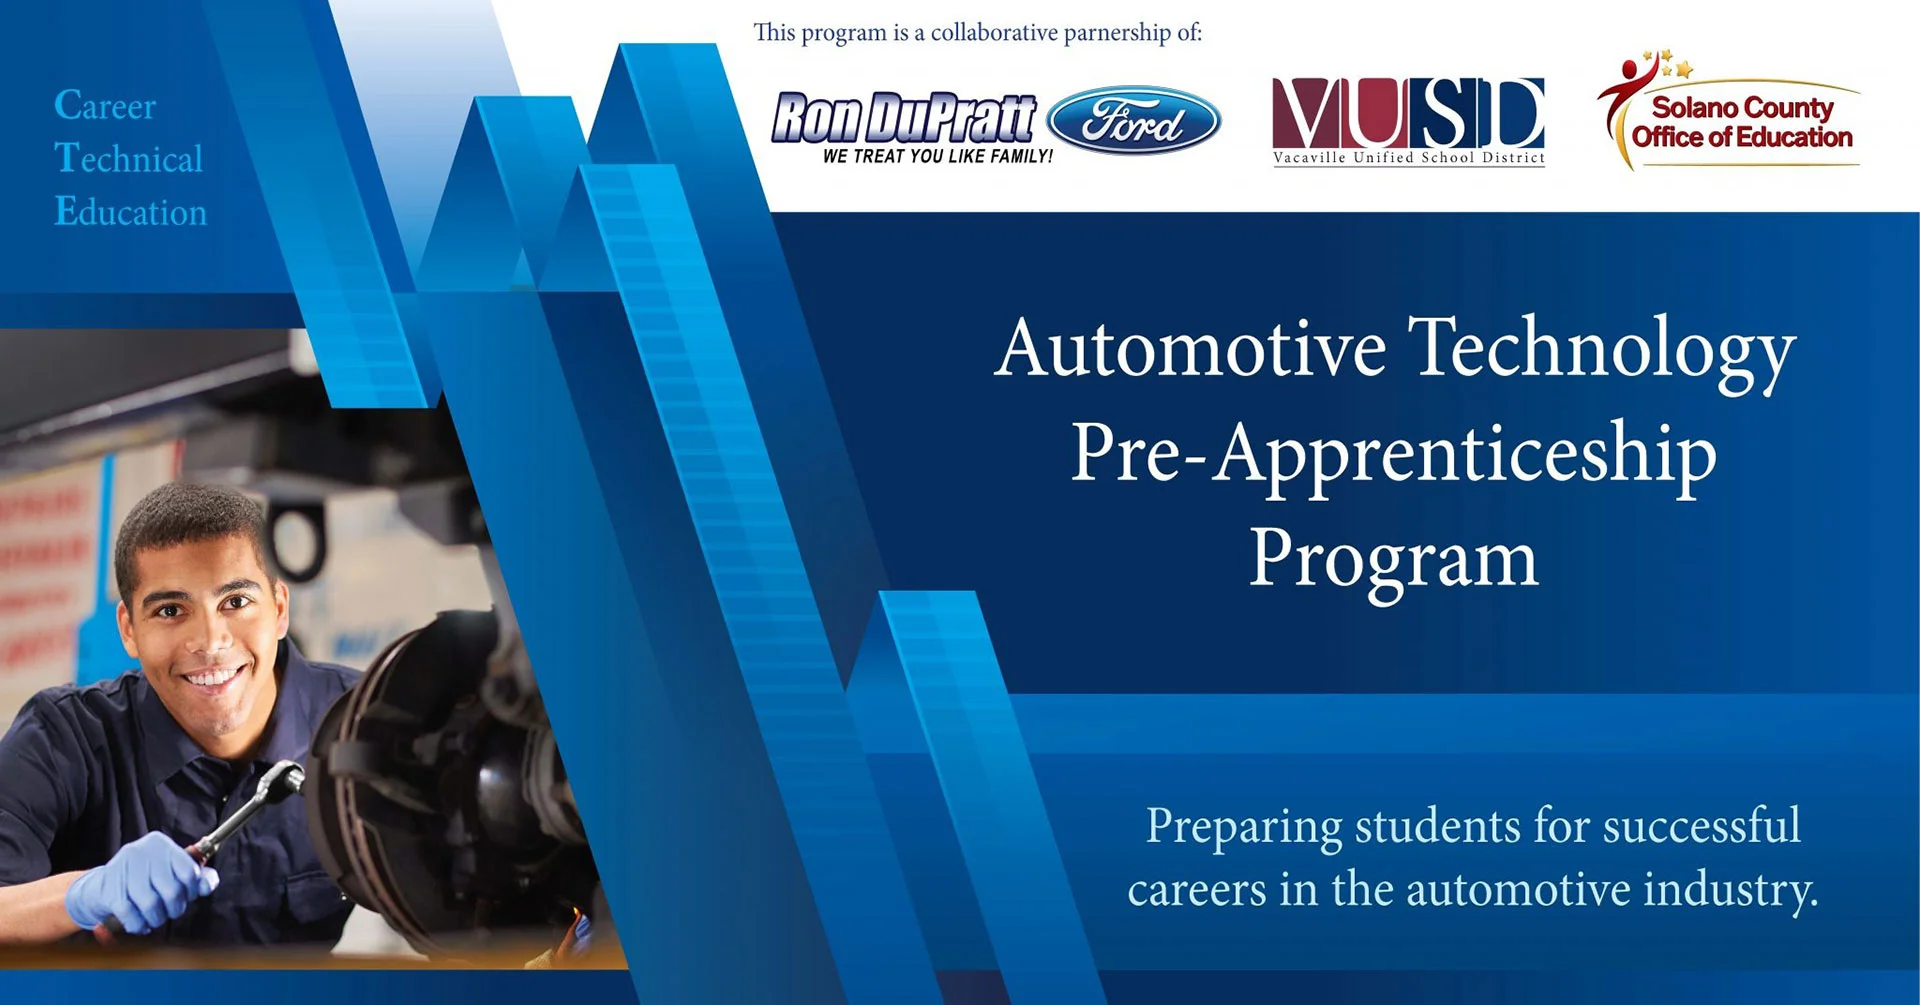 Automotive pre-apprenticeship program at Ron DuPratt Ford